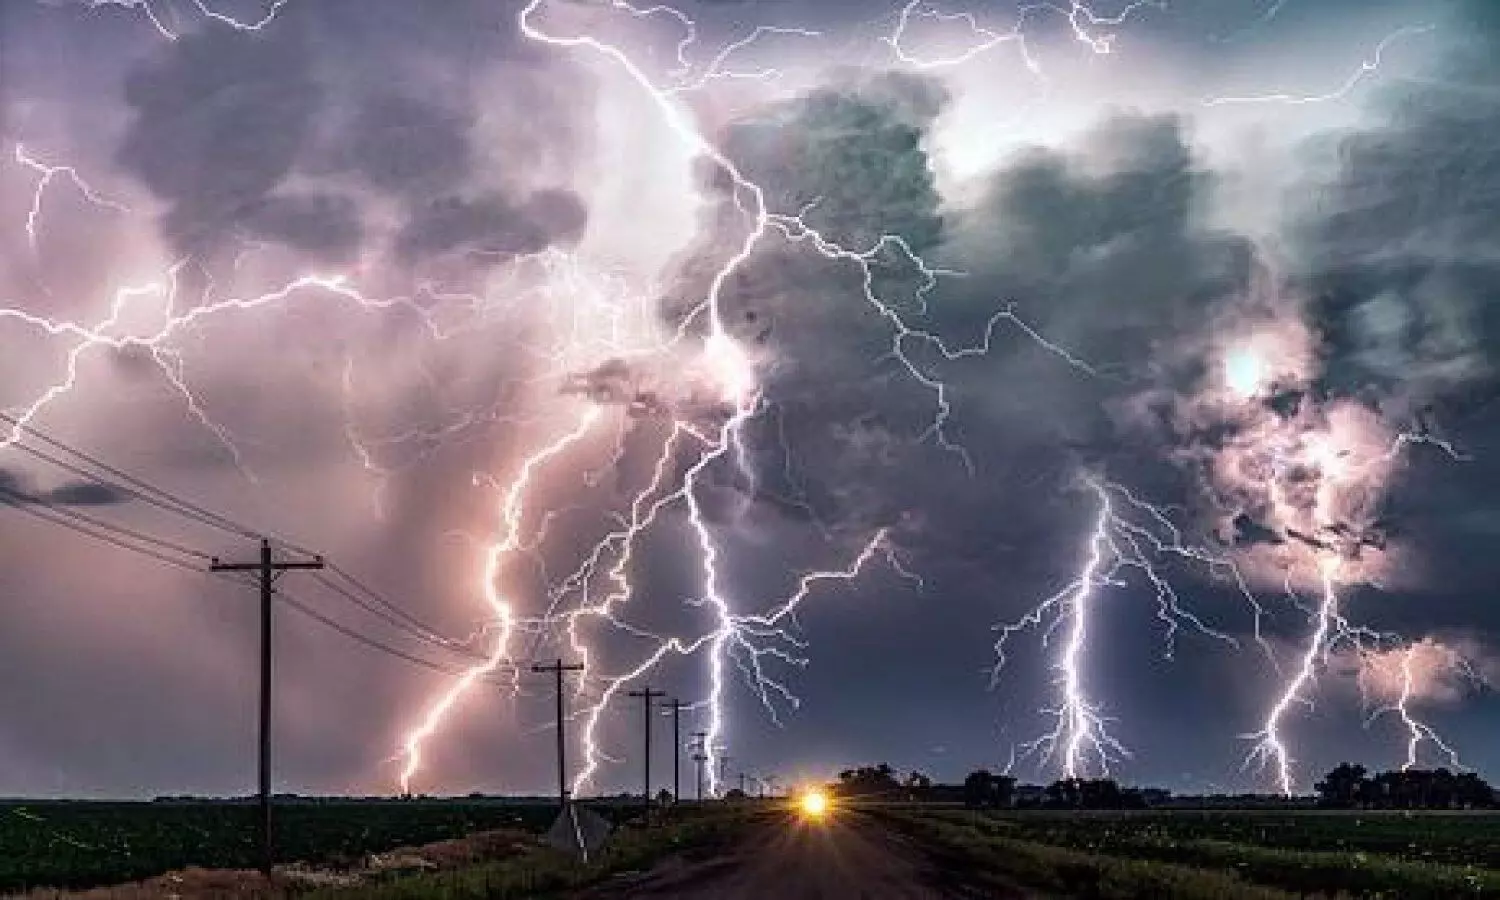 Thunderstorm symbolic photo taken from social media